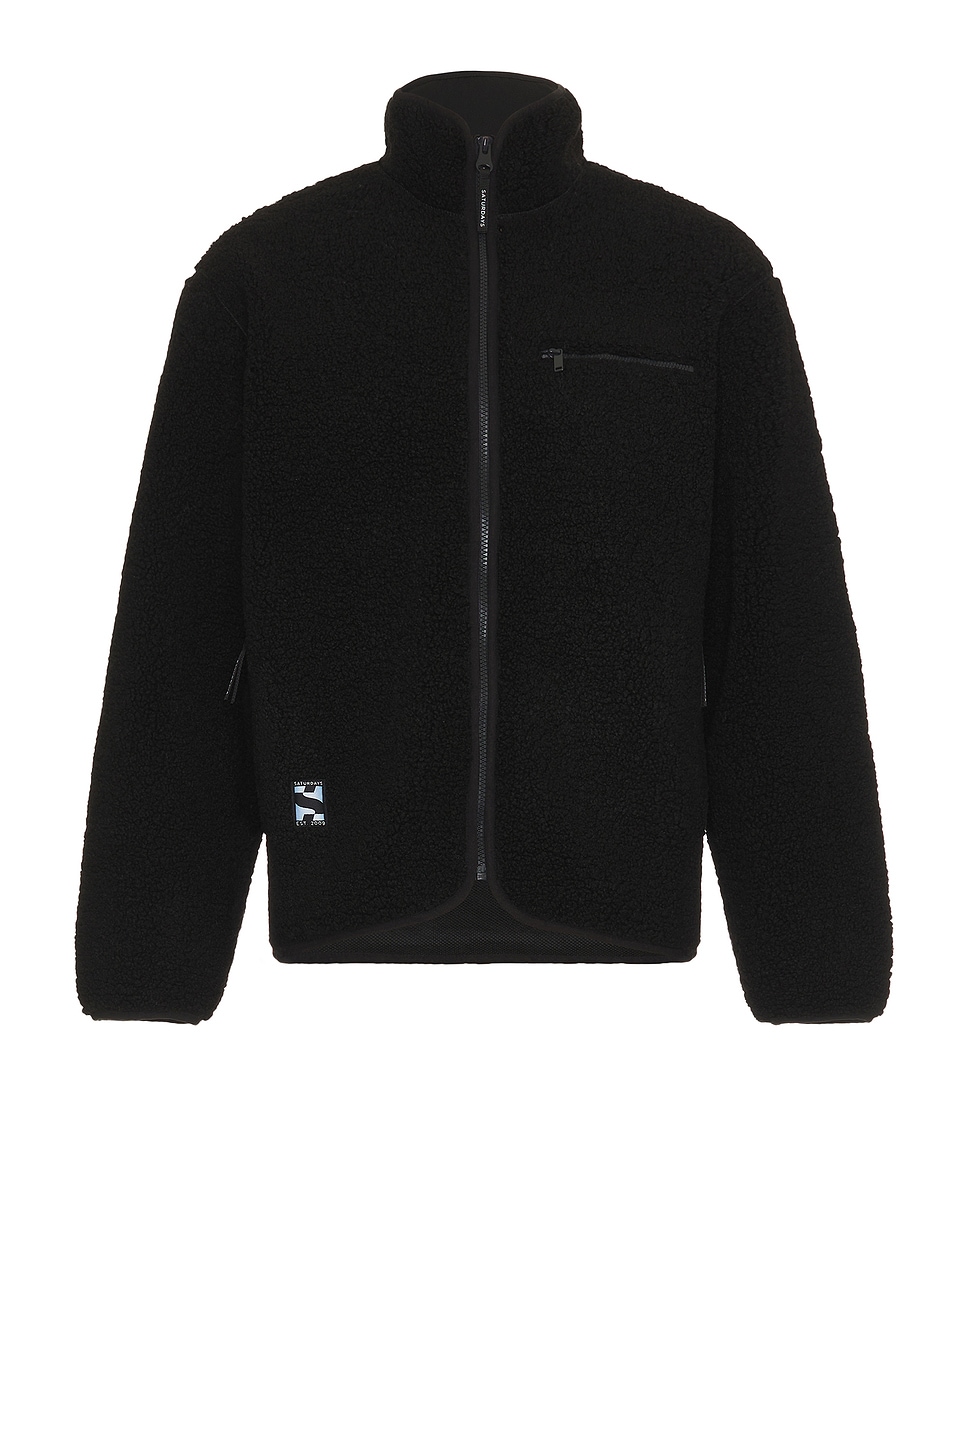 Image 1 of SATURDAYS NYC Spencer Polar Fleece Full Zip Jacket in Black